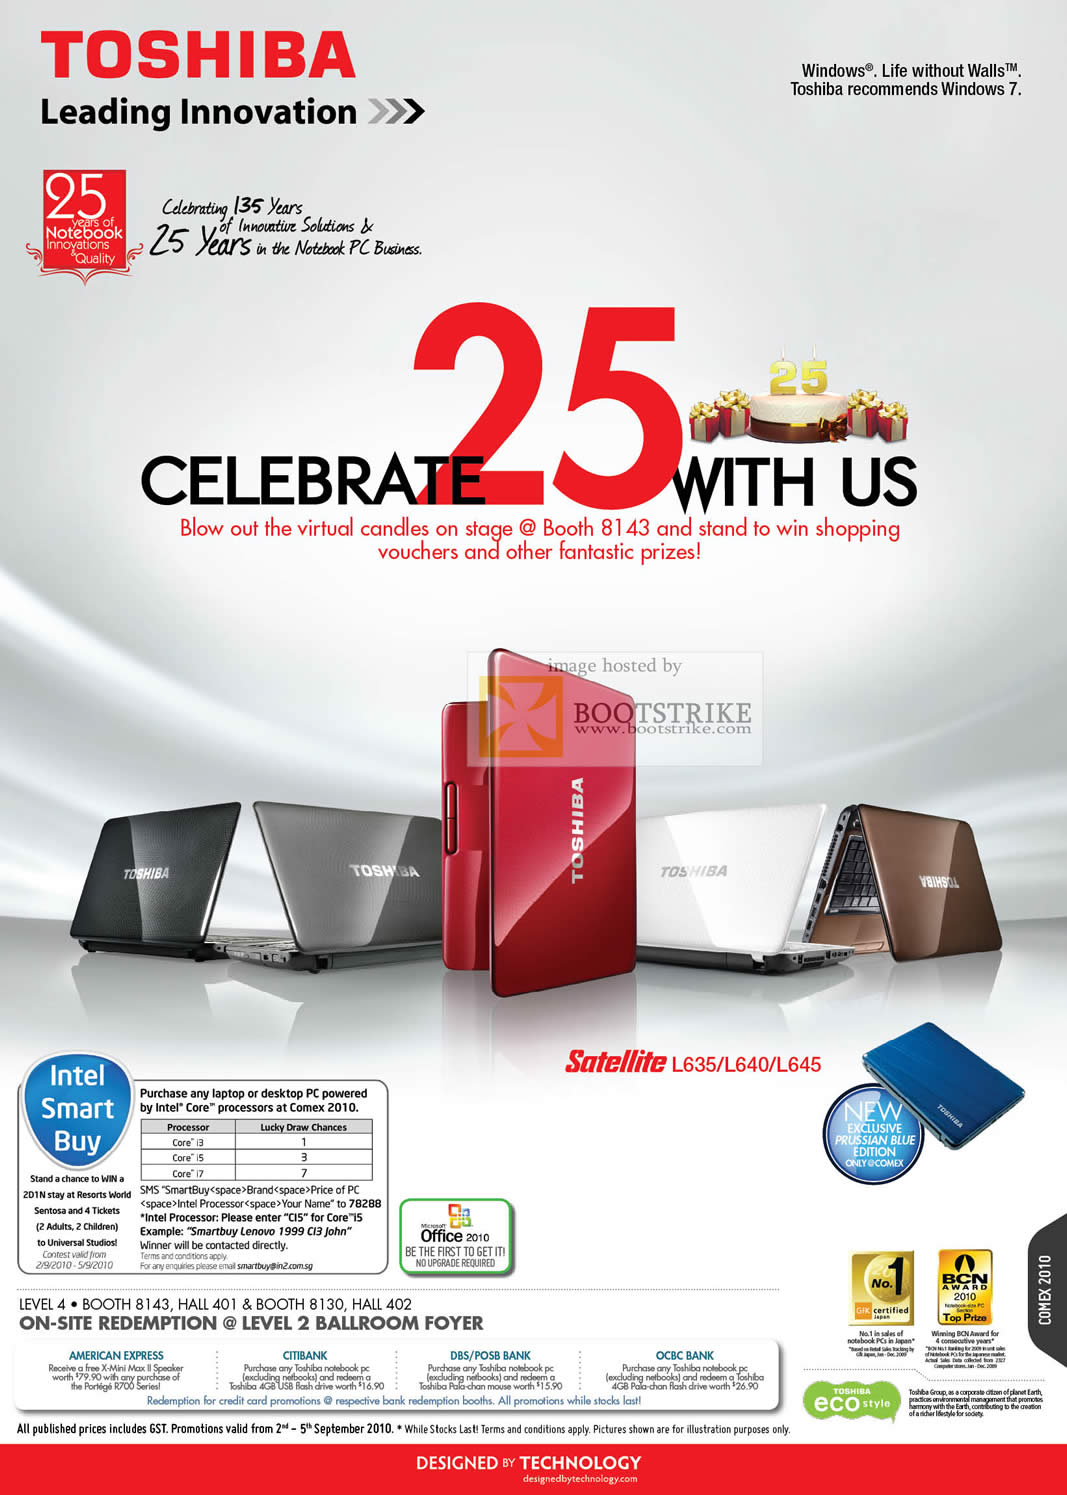 Comex 2010 price list image brochure of Toshiba 25 Years Celebration Satellite L635 L640 L645